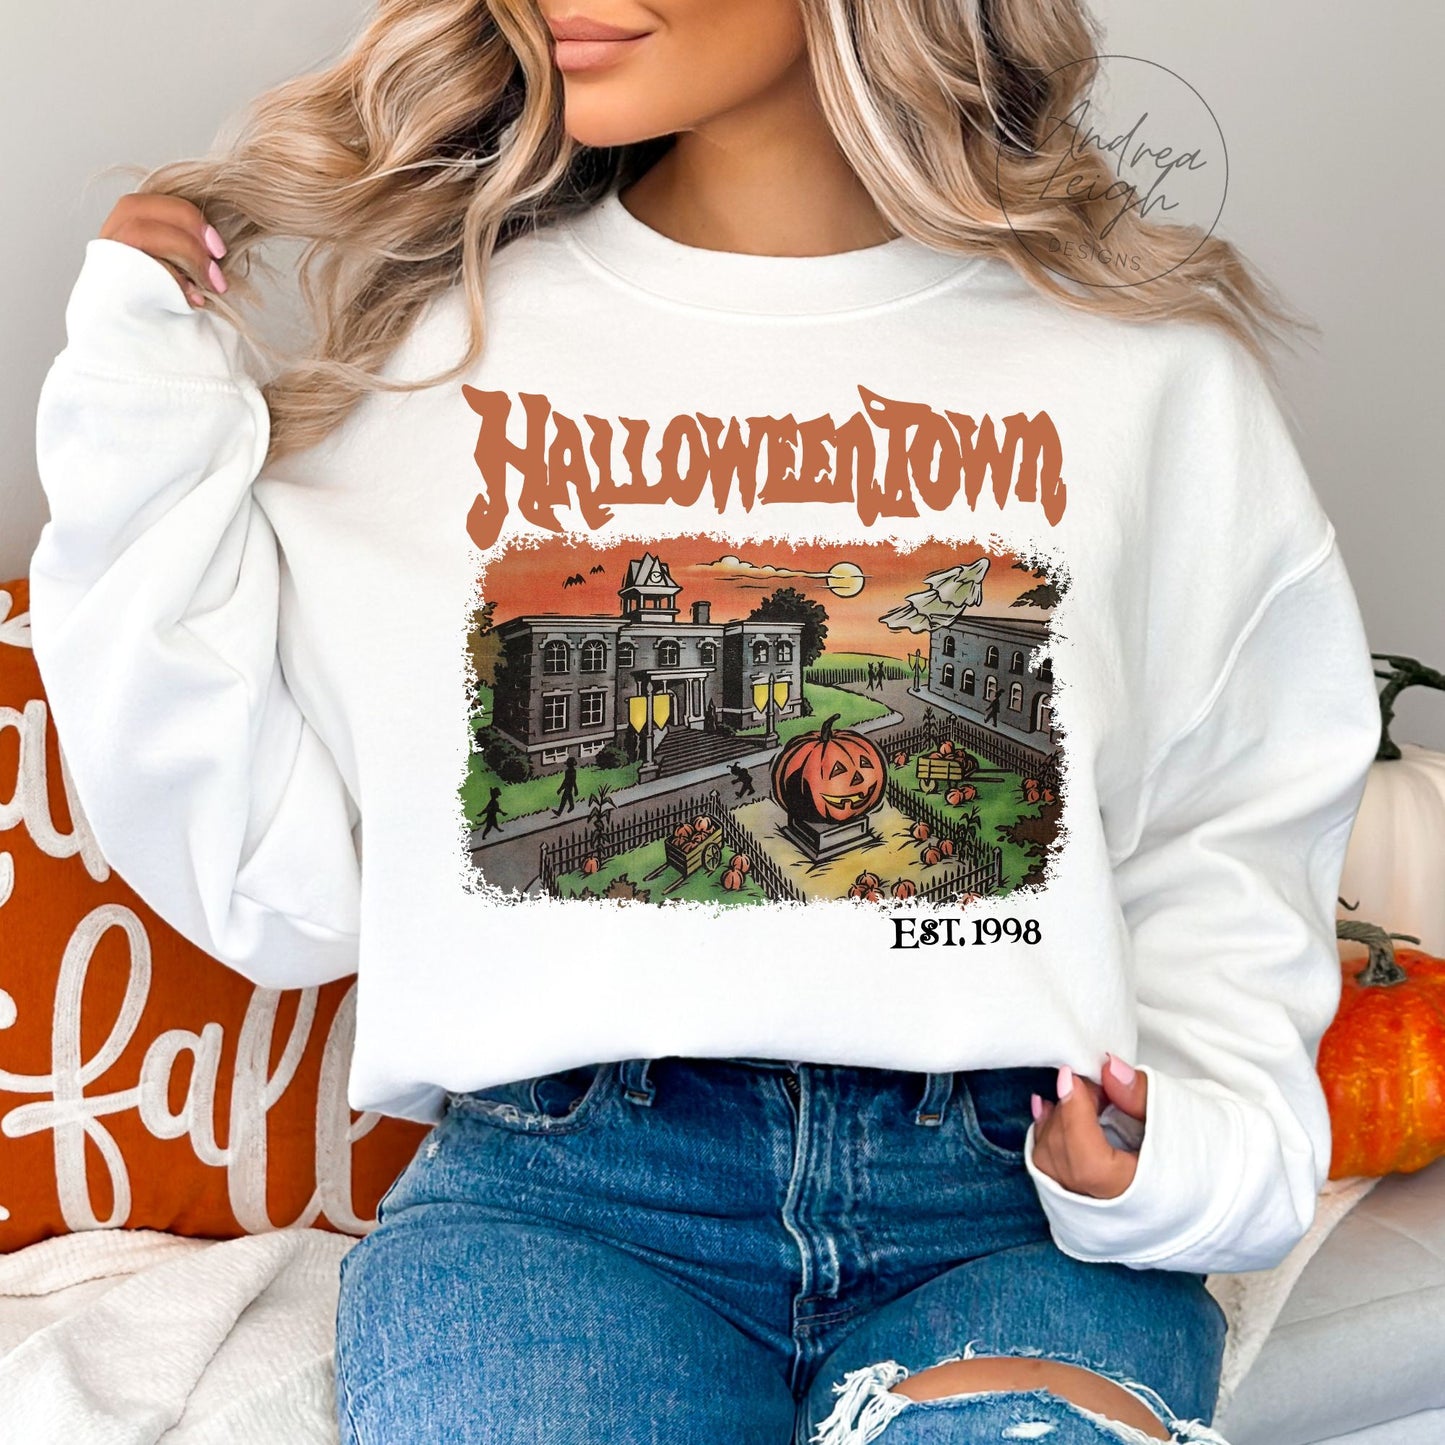 Halloween Town